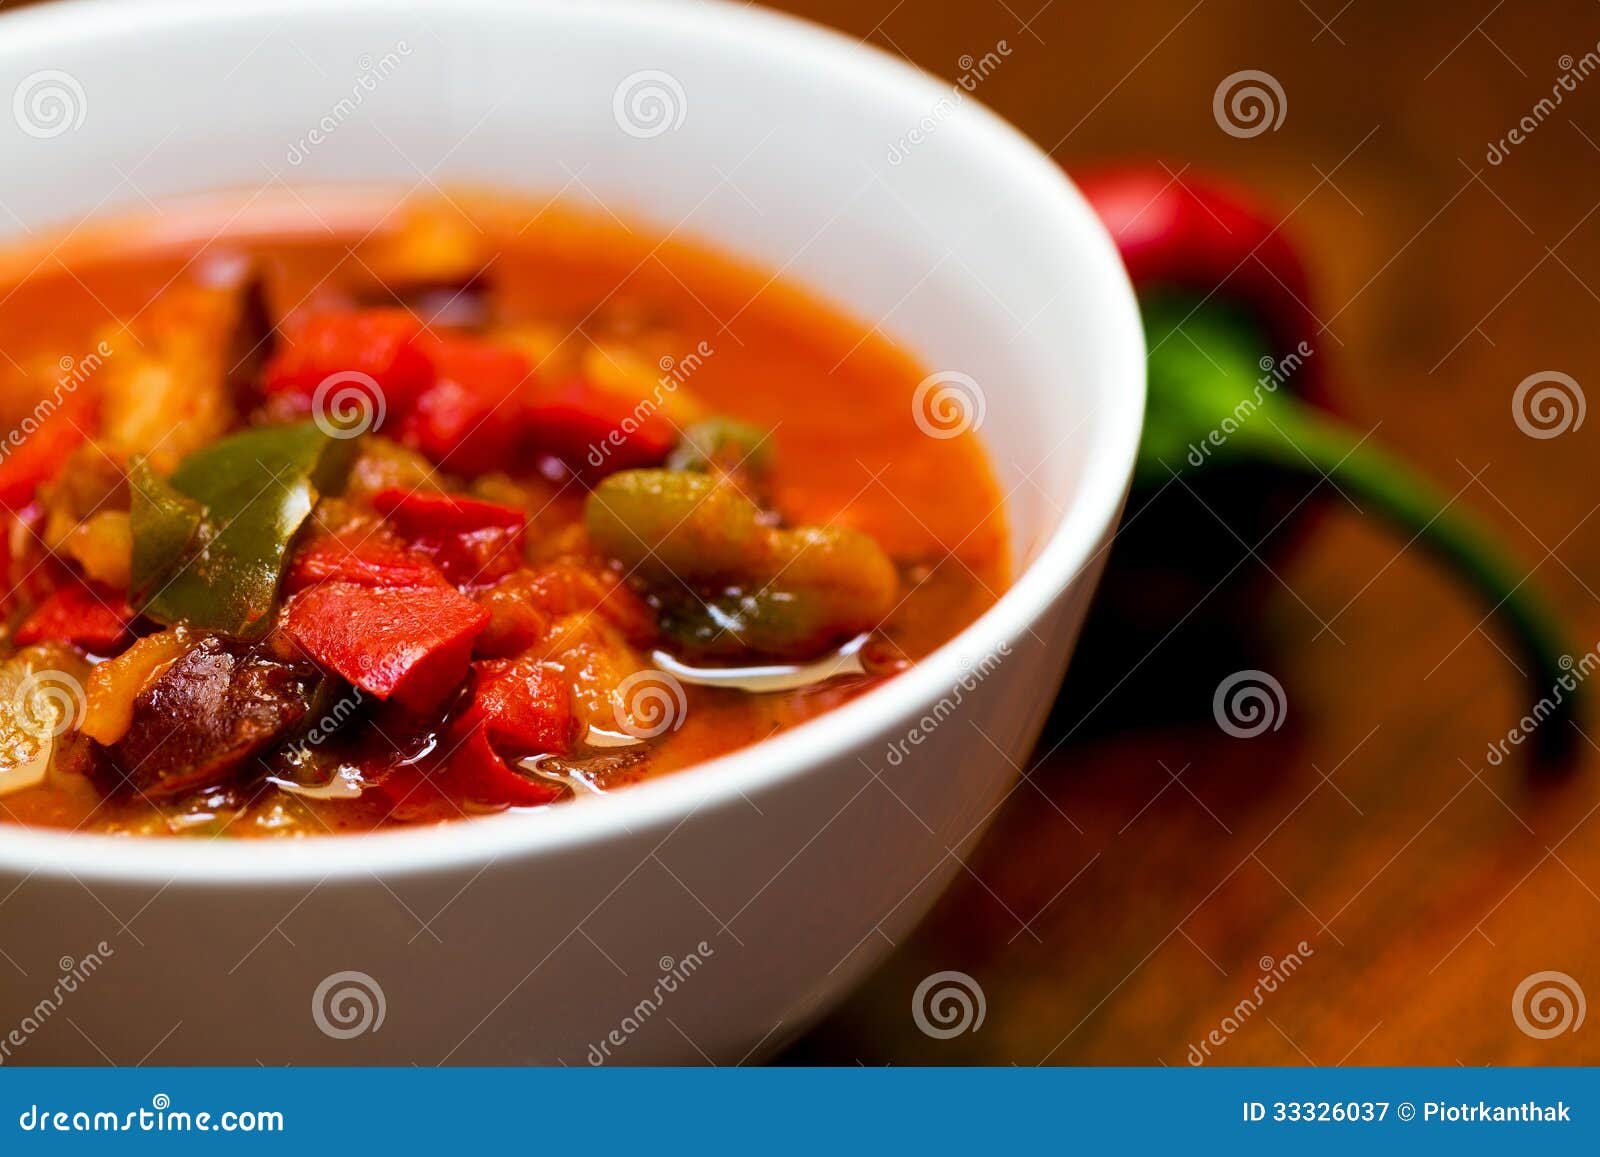 lecho-white-bowl-red-chili-pepper-333260